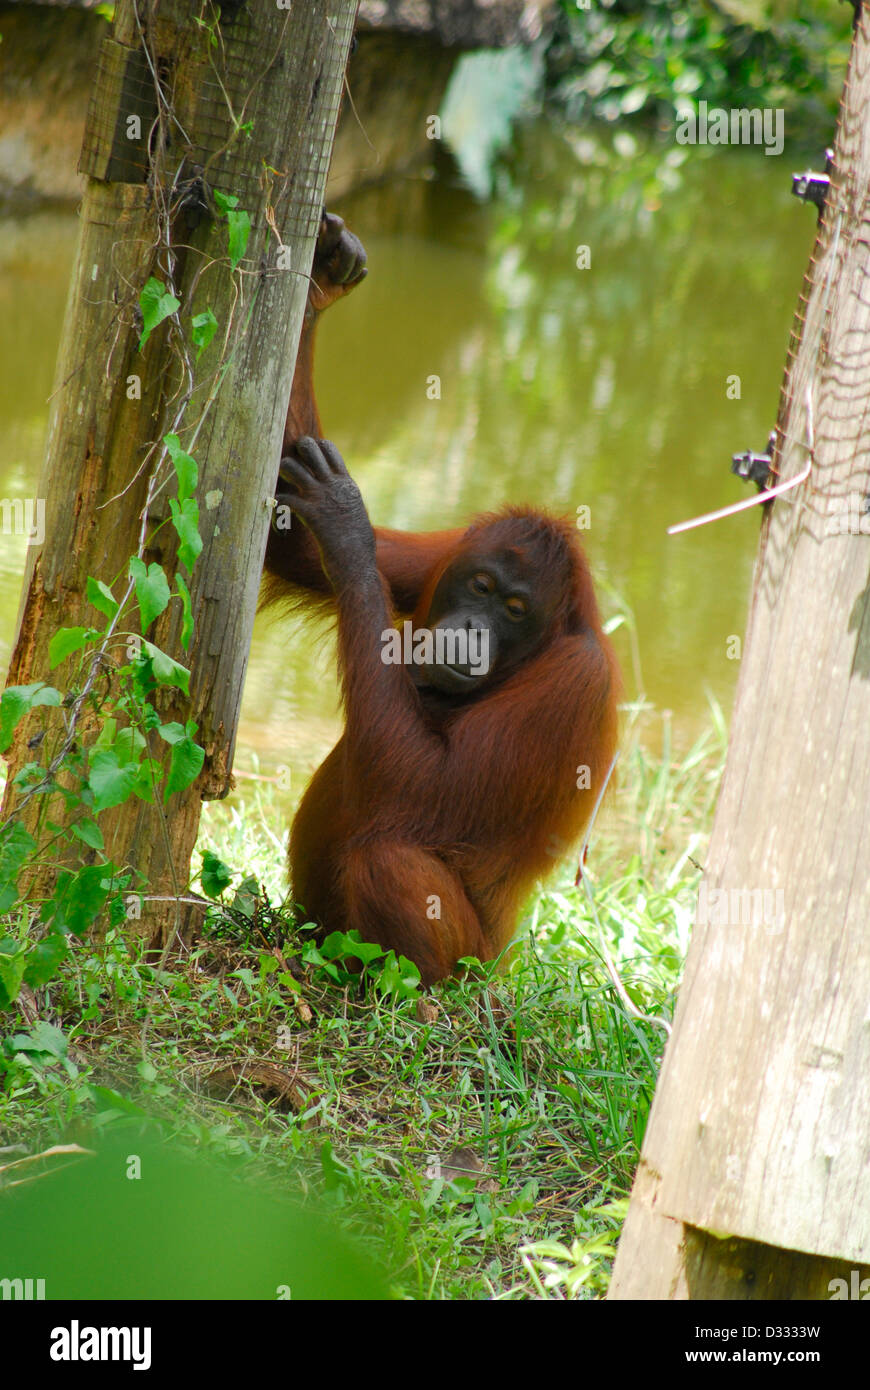 orangutang holding onto a tree Stock Photo